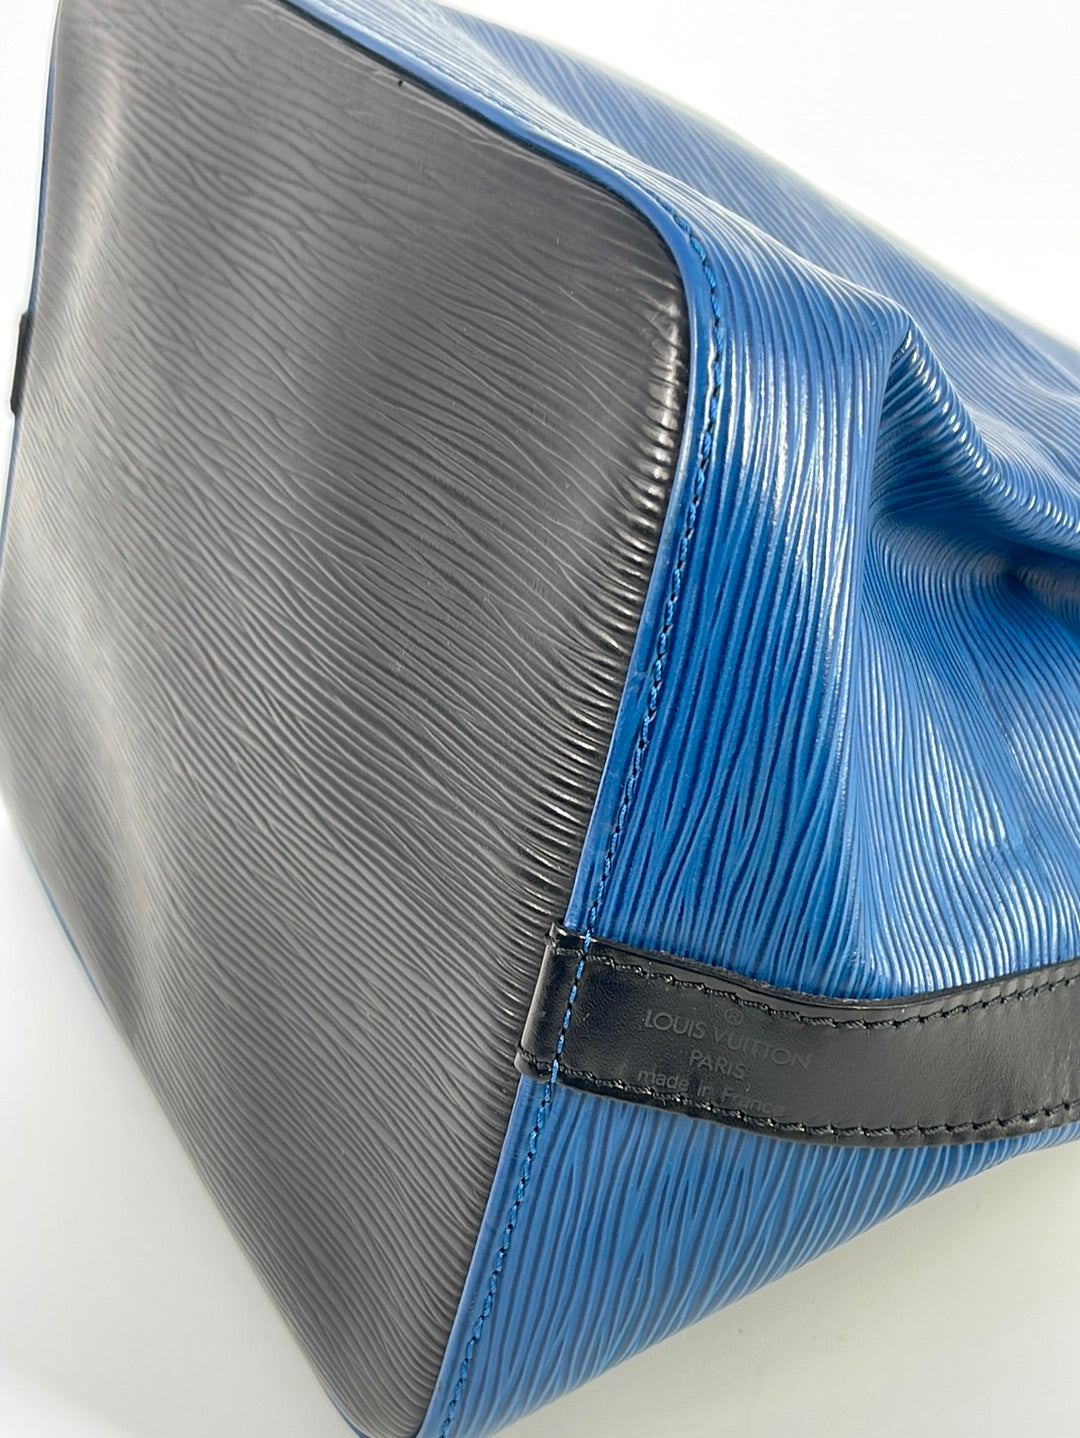 Louis Vuitton Noe PM Bucket Bag in Toledo Blue EPI Leather, France